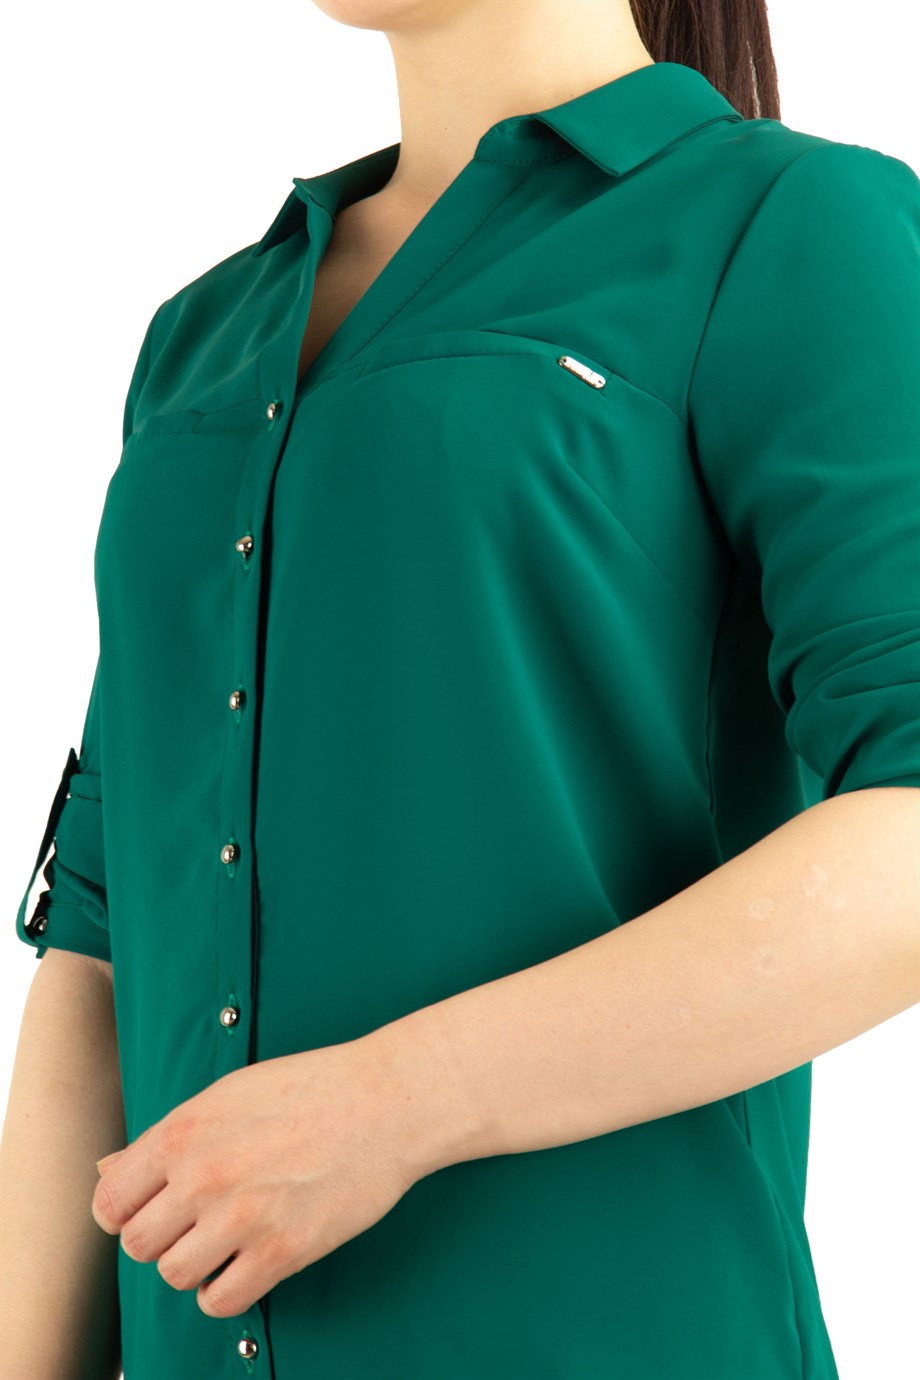 Classic Office Big Size Shirt - Mint Green - Wholesale Womens